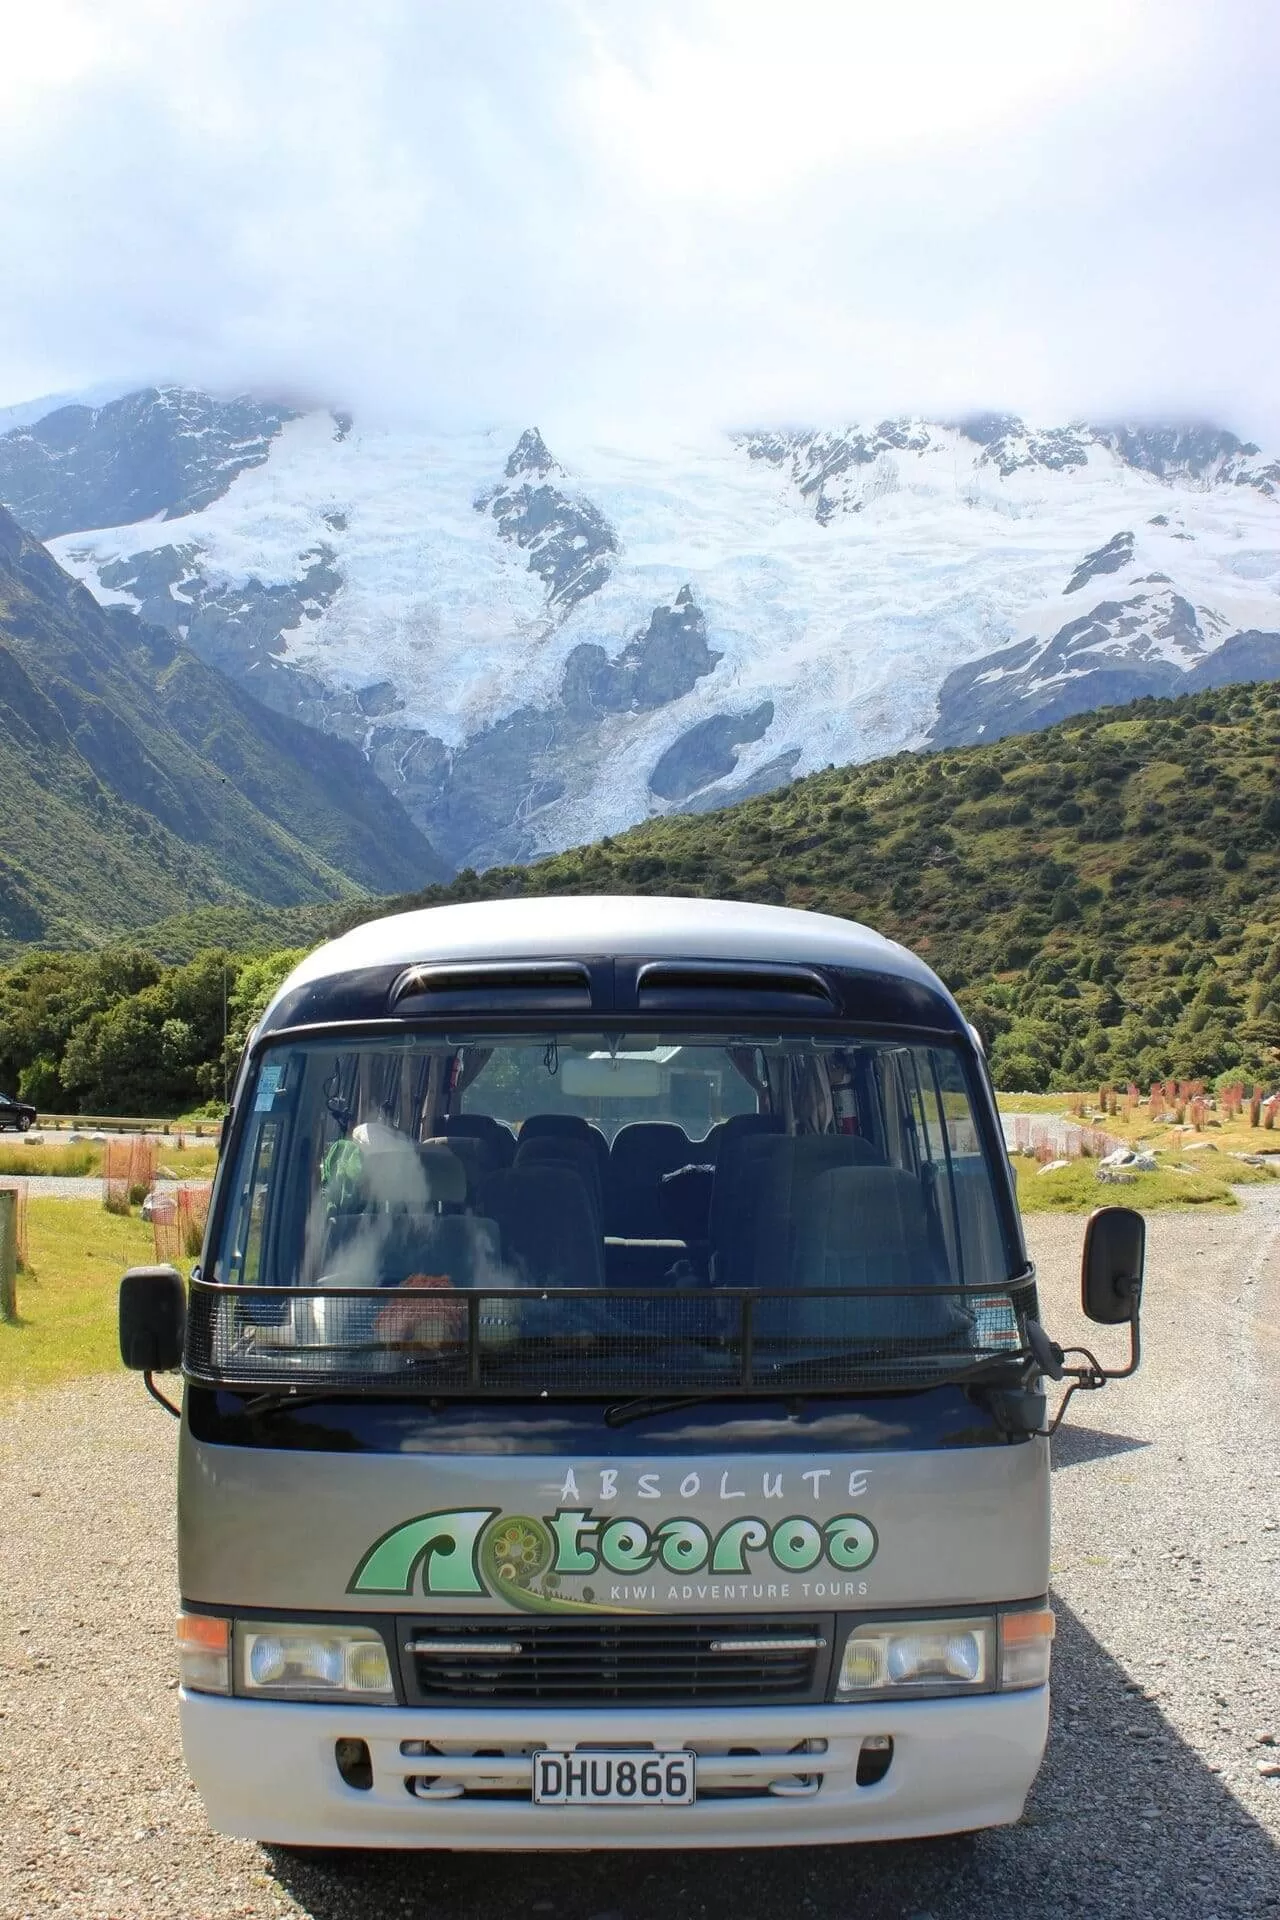 absolute aotearoa tour bus with glacier